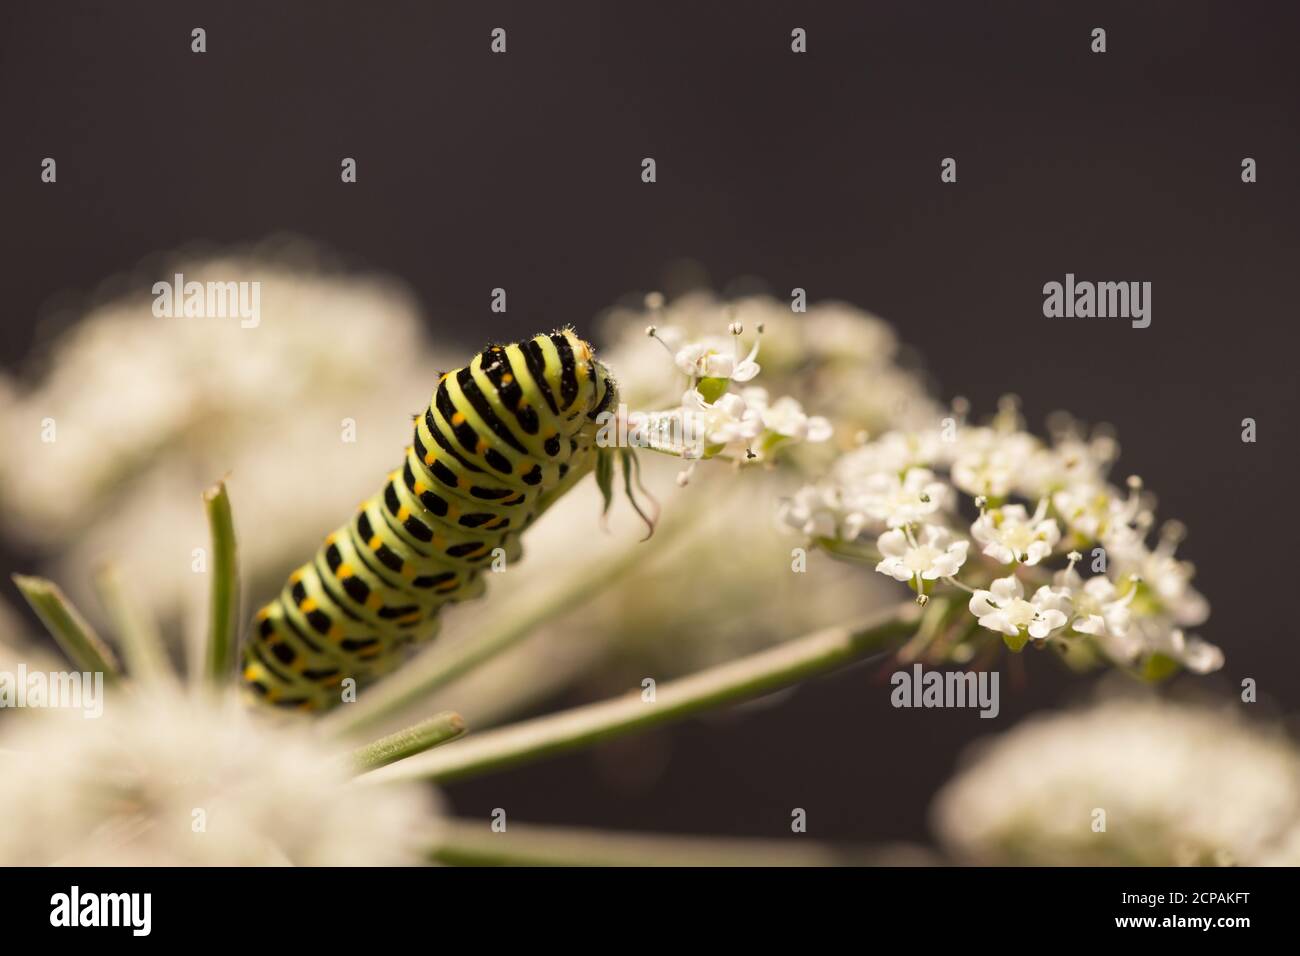 Papilio machaon larva on apiaceae plant, dark nature background Stock Photo